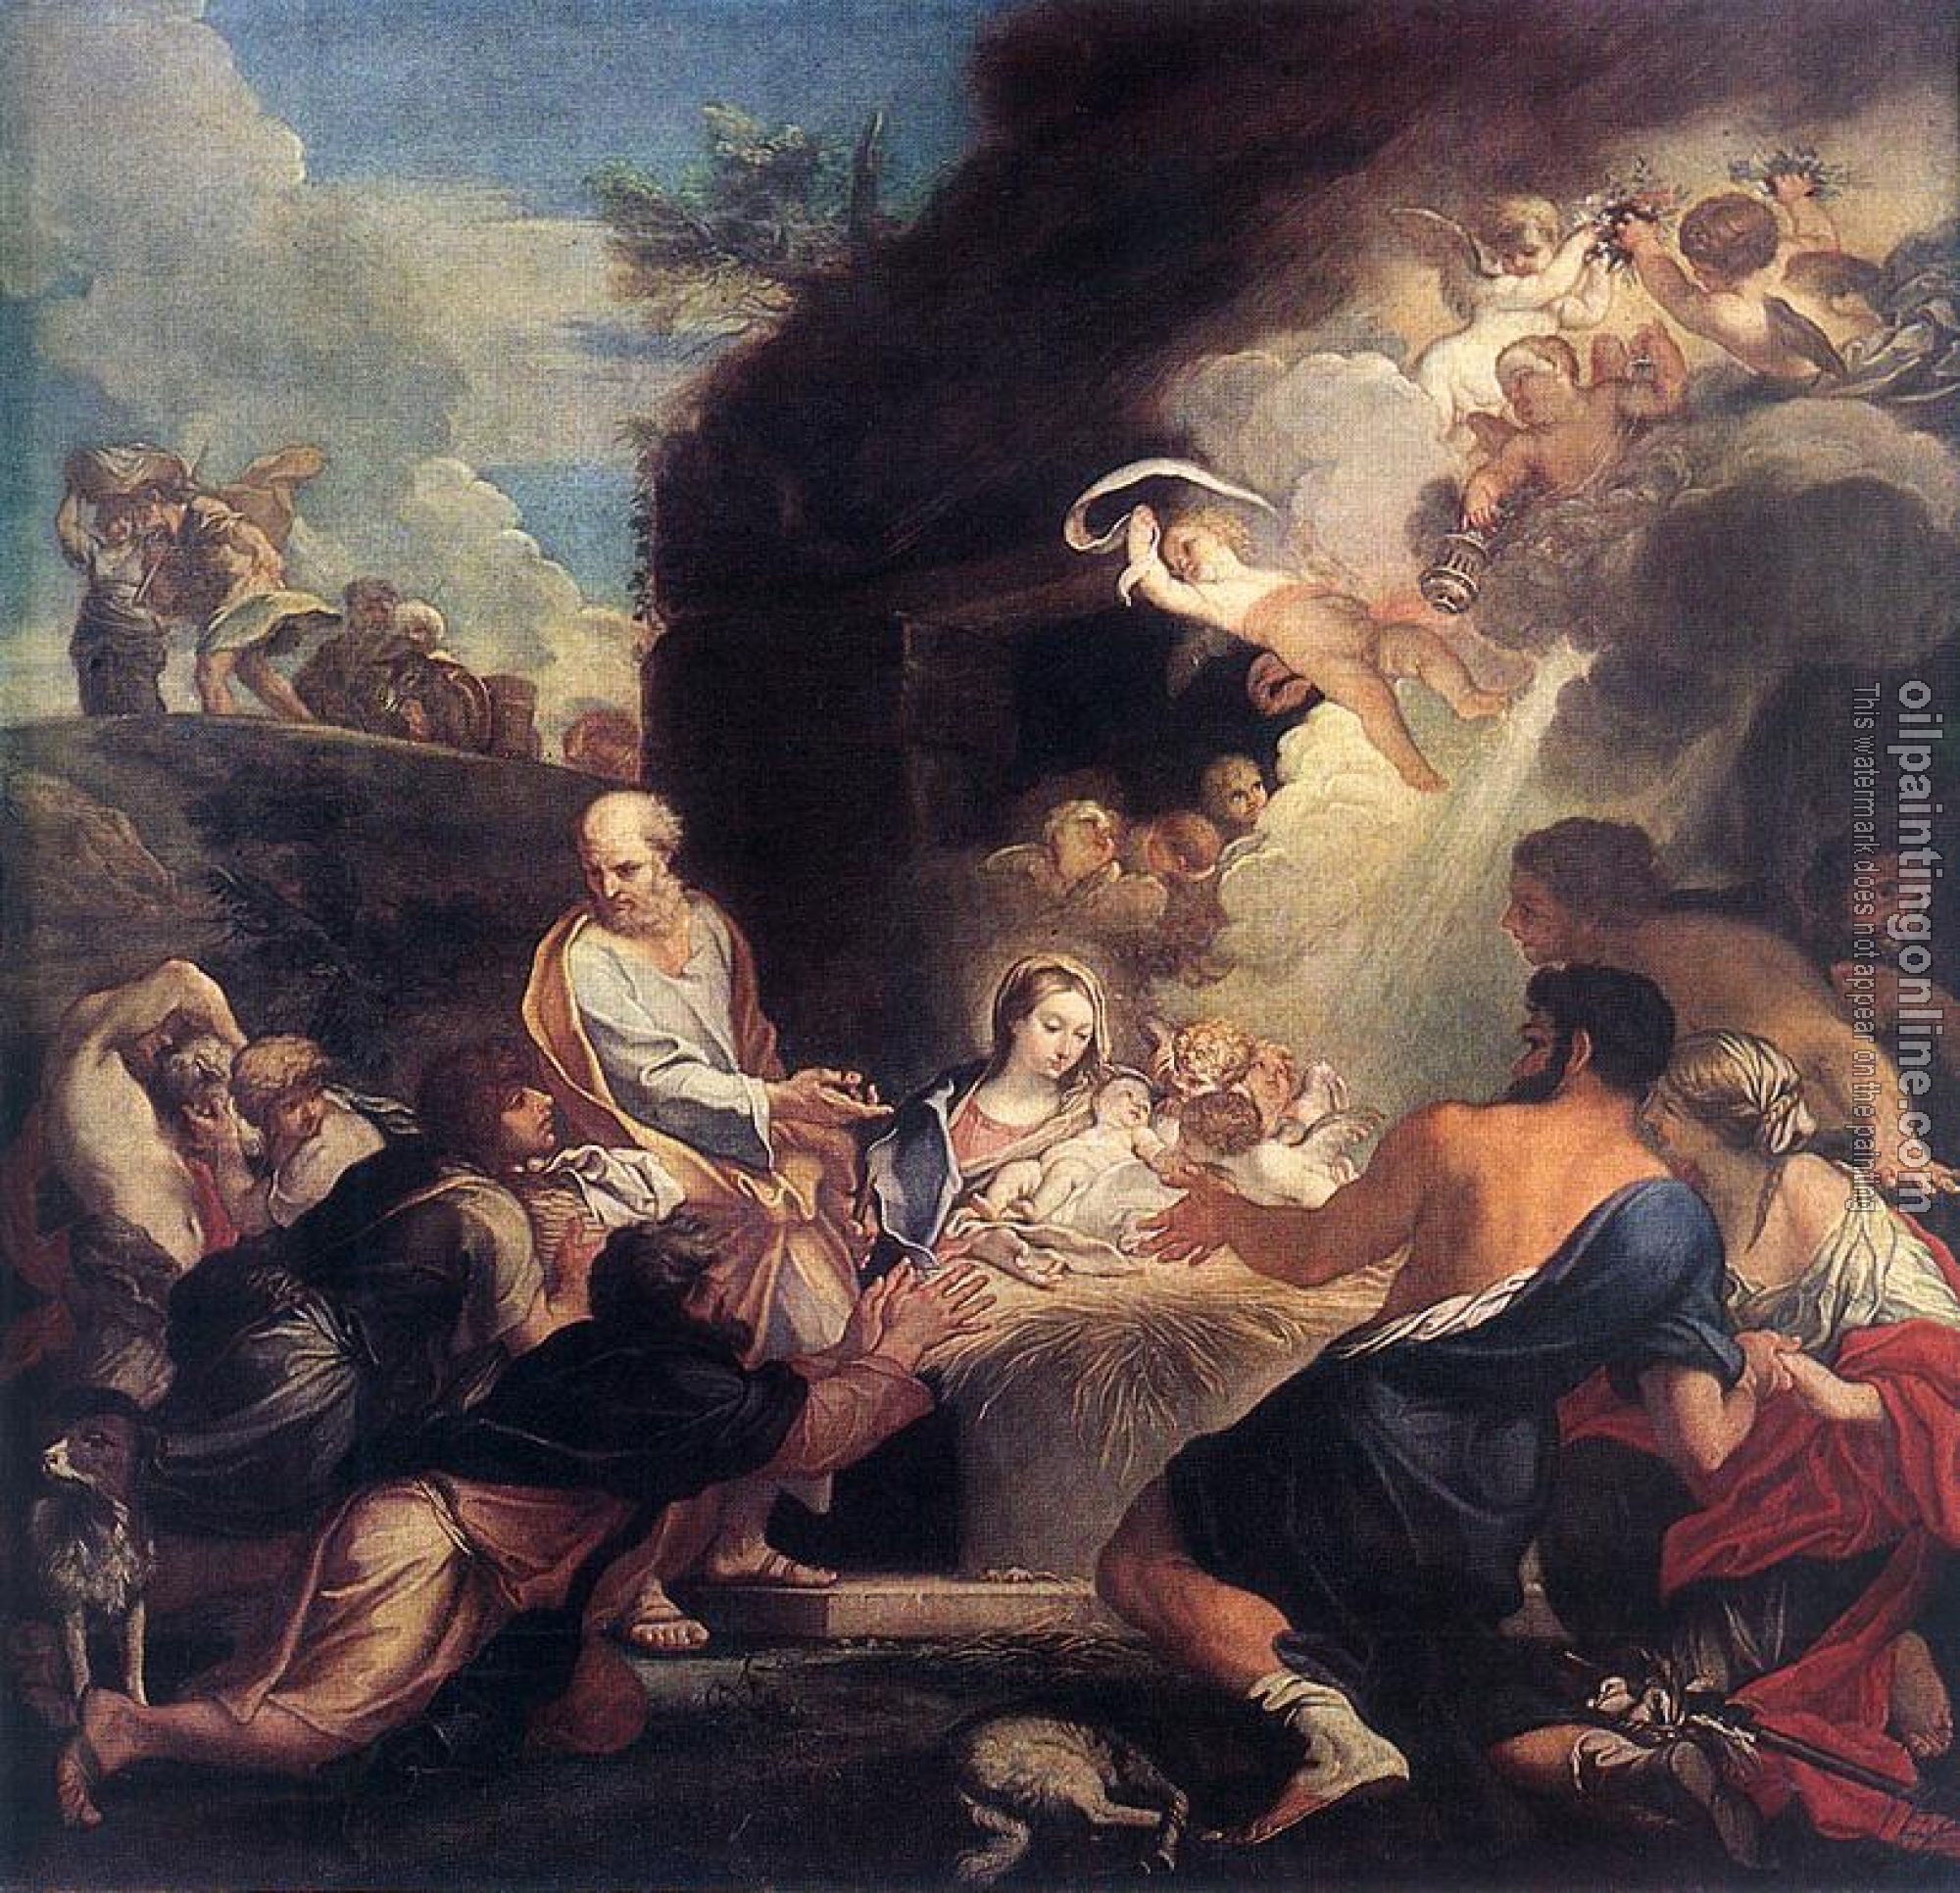 Maratta, Carlo - Adoration of the Shepherds